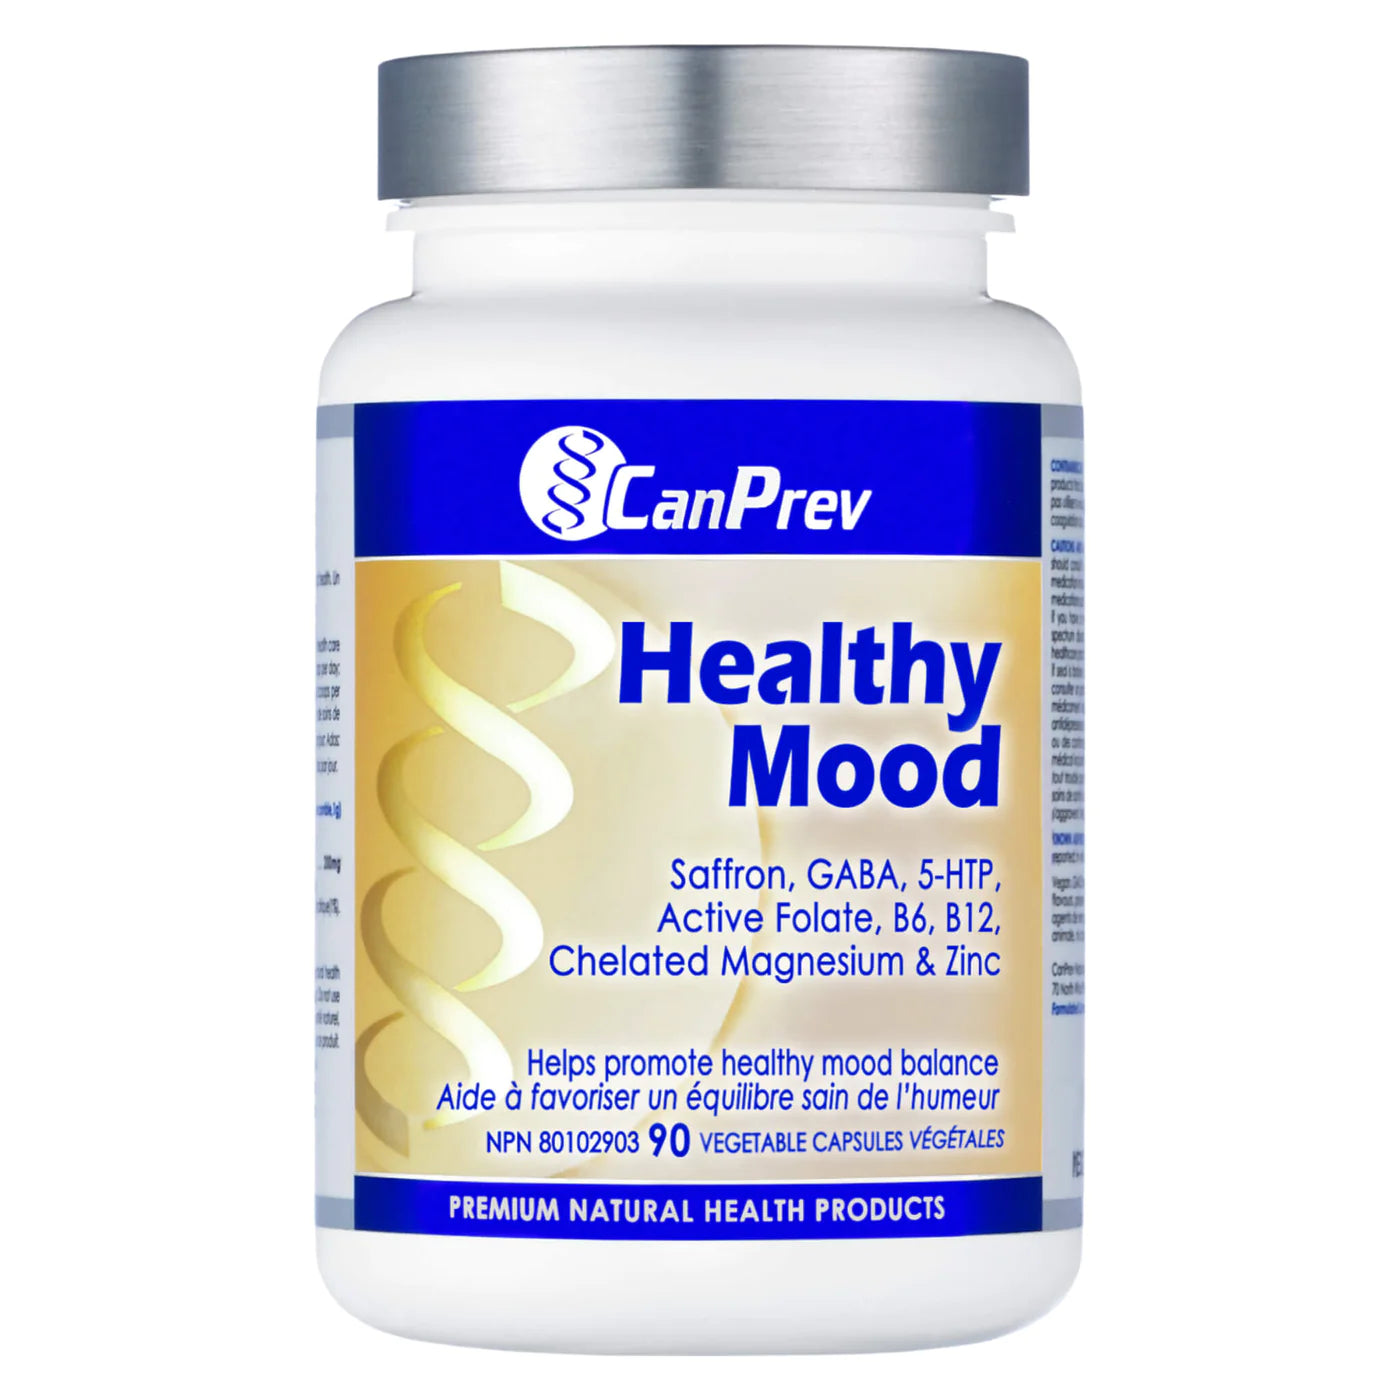 CanPrev Healthy Mood 90 v-caps